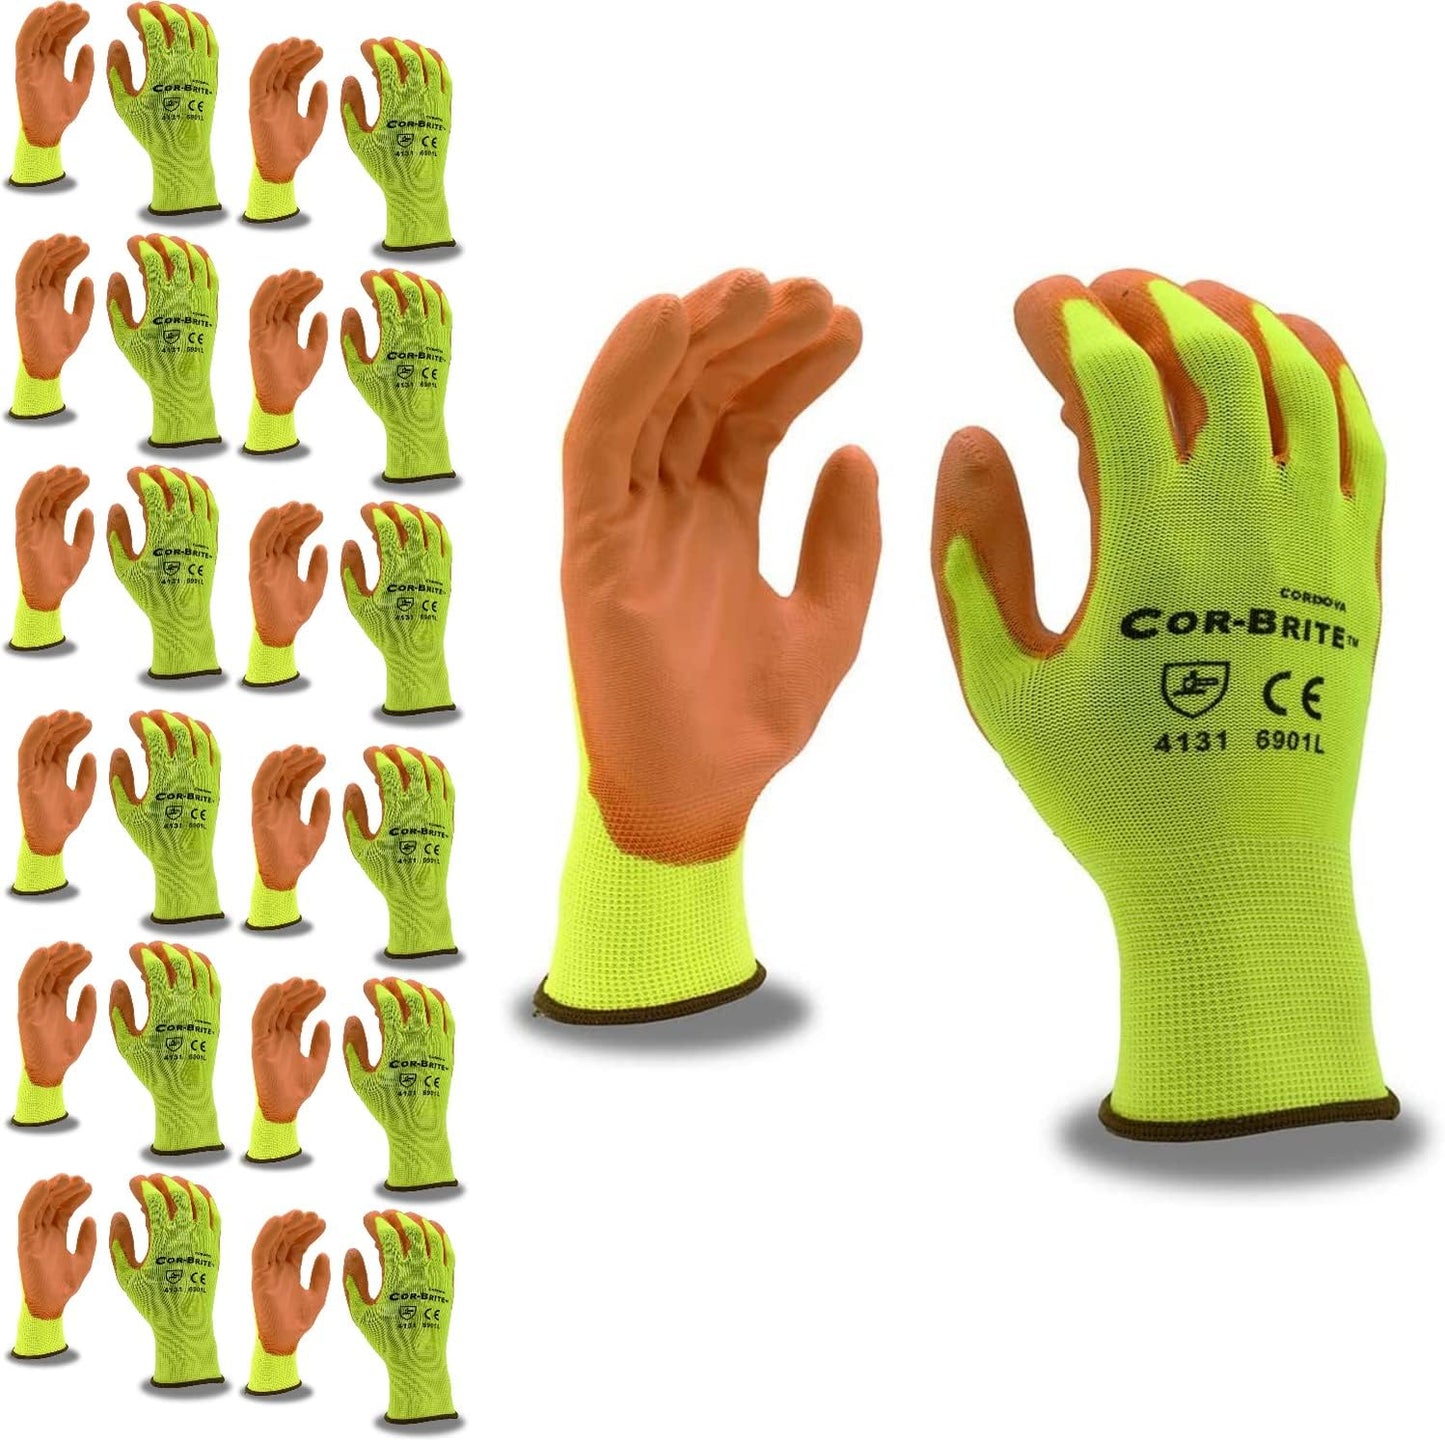 Polyurethane Coated Work Gloves, 12-Pack